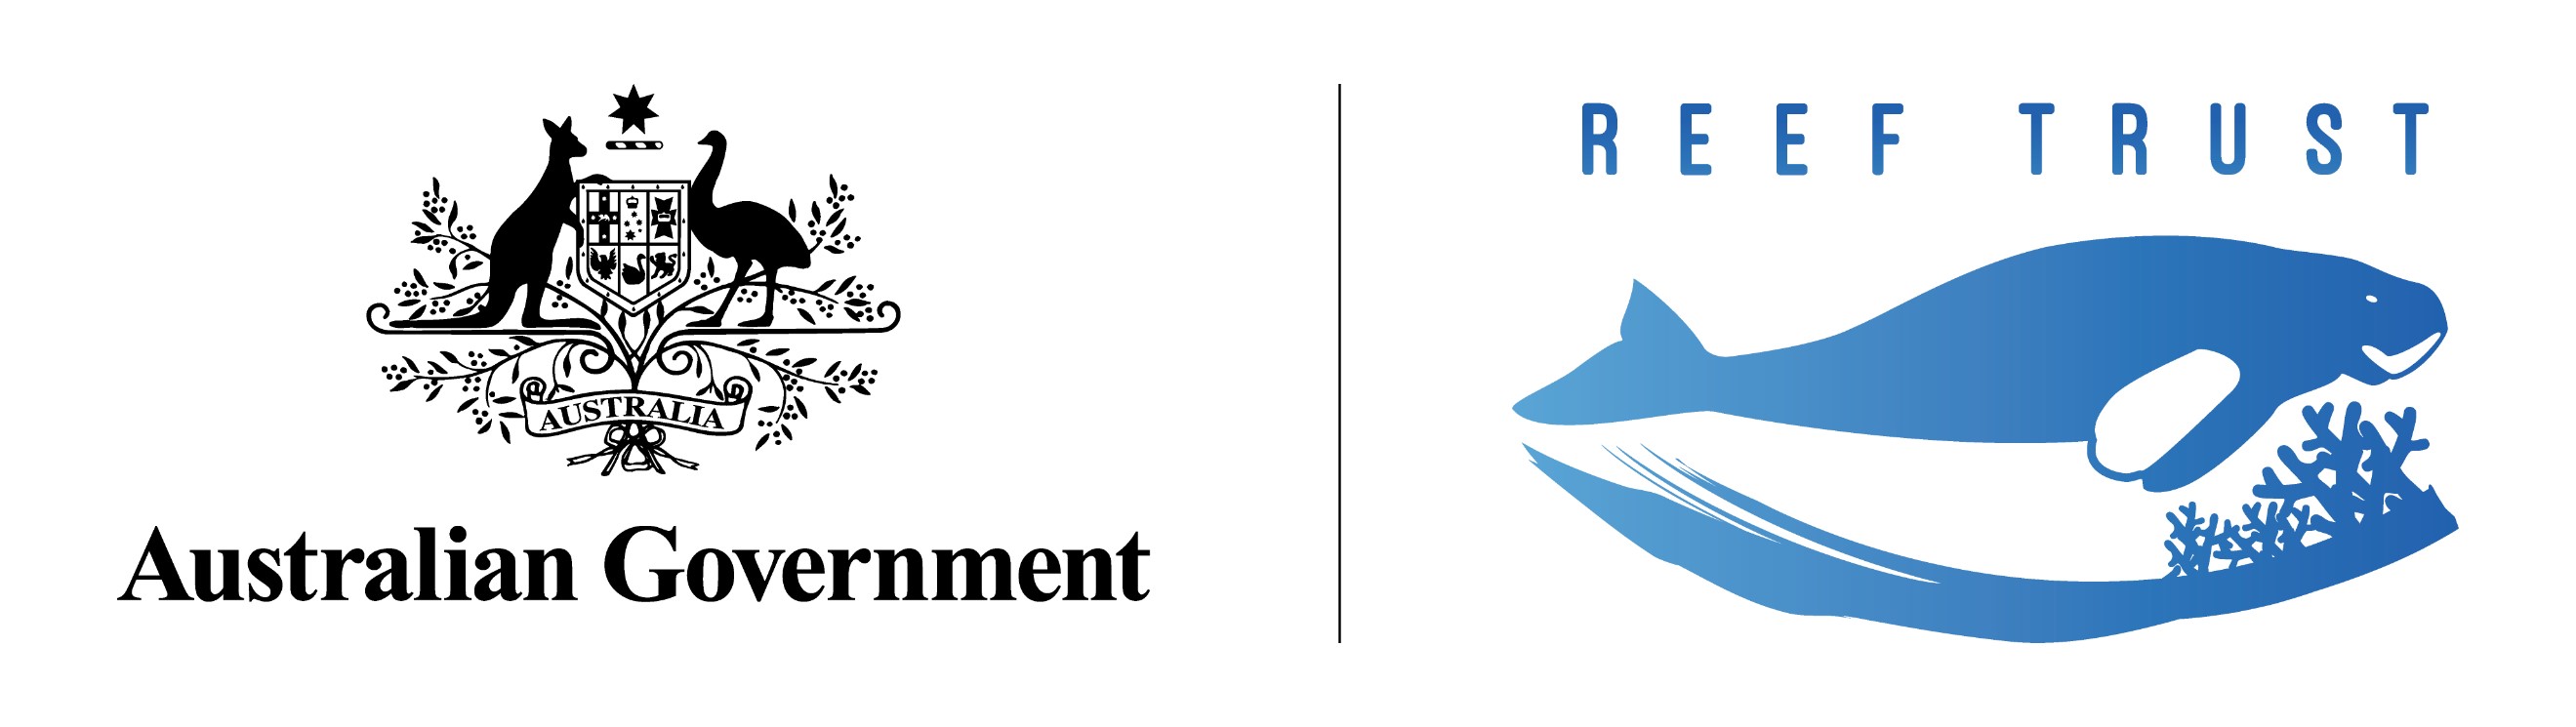 Reef Trust logo